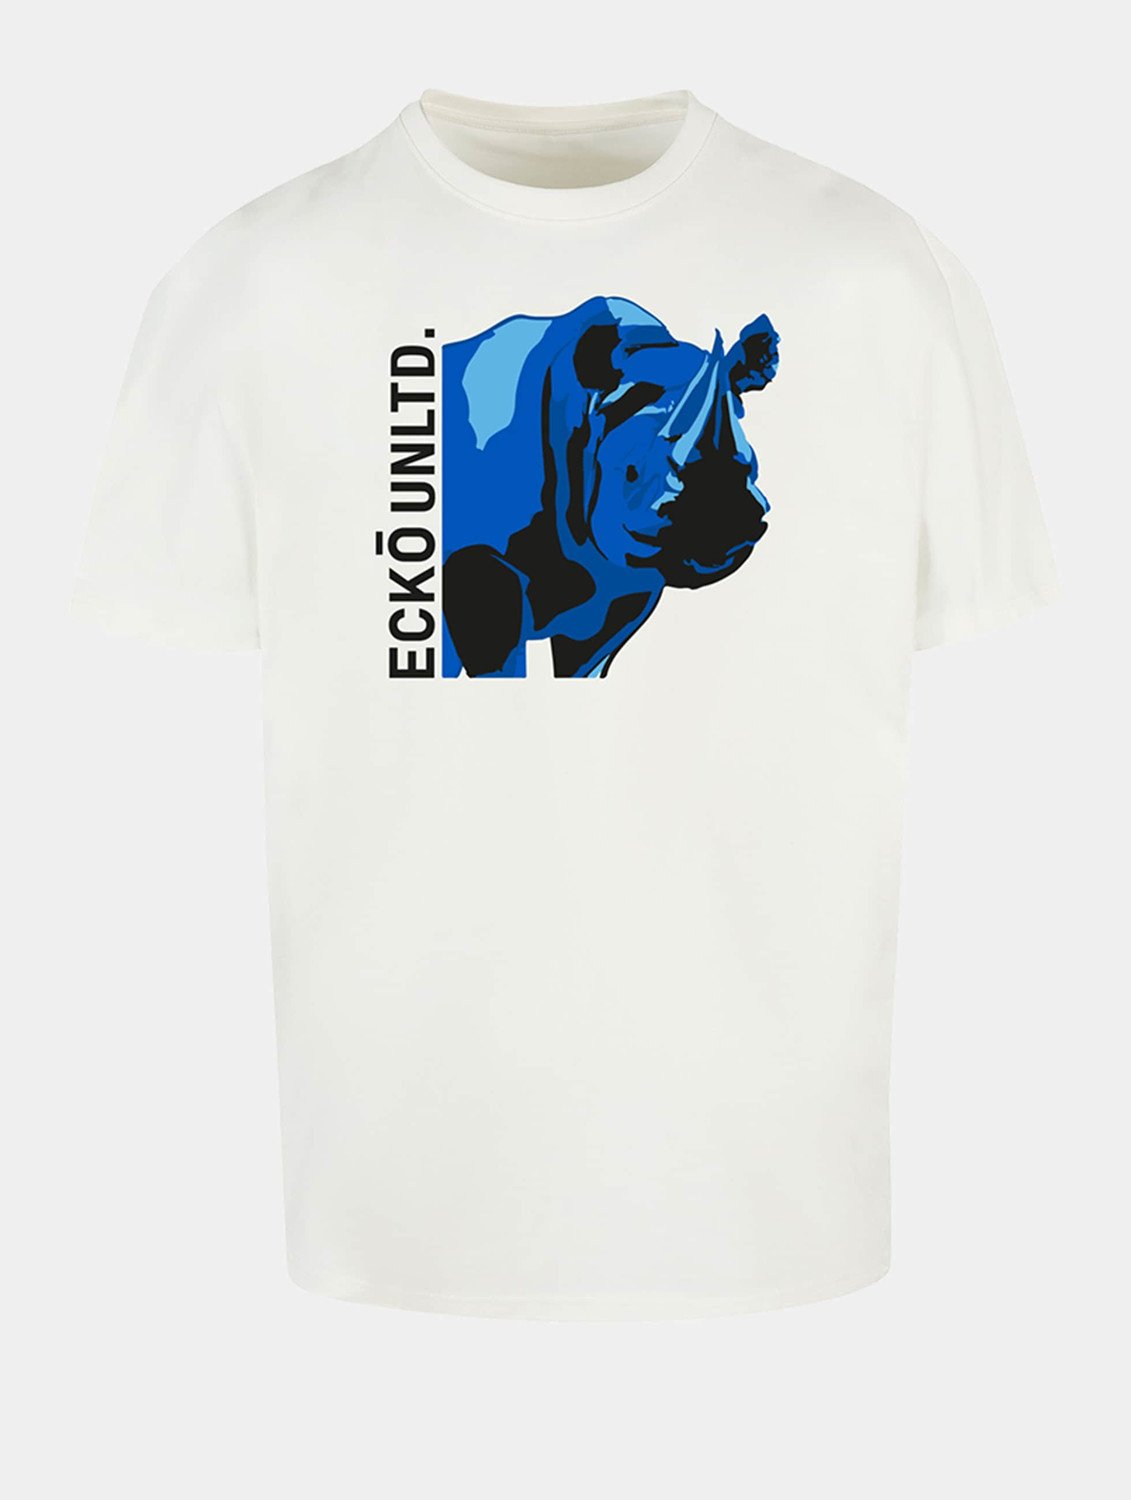 Pánské tričko Ecko Unltd. Rhino Color - bílé